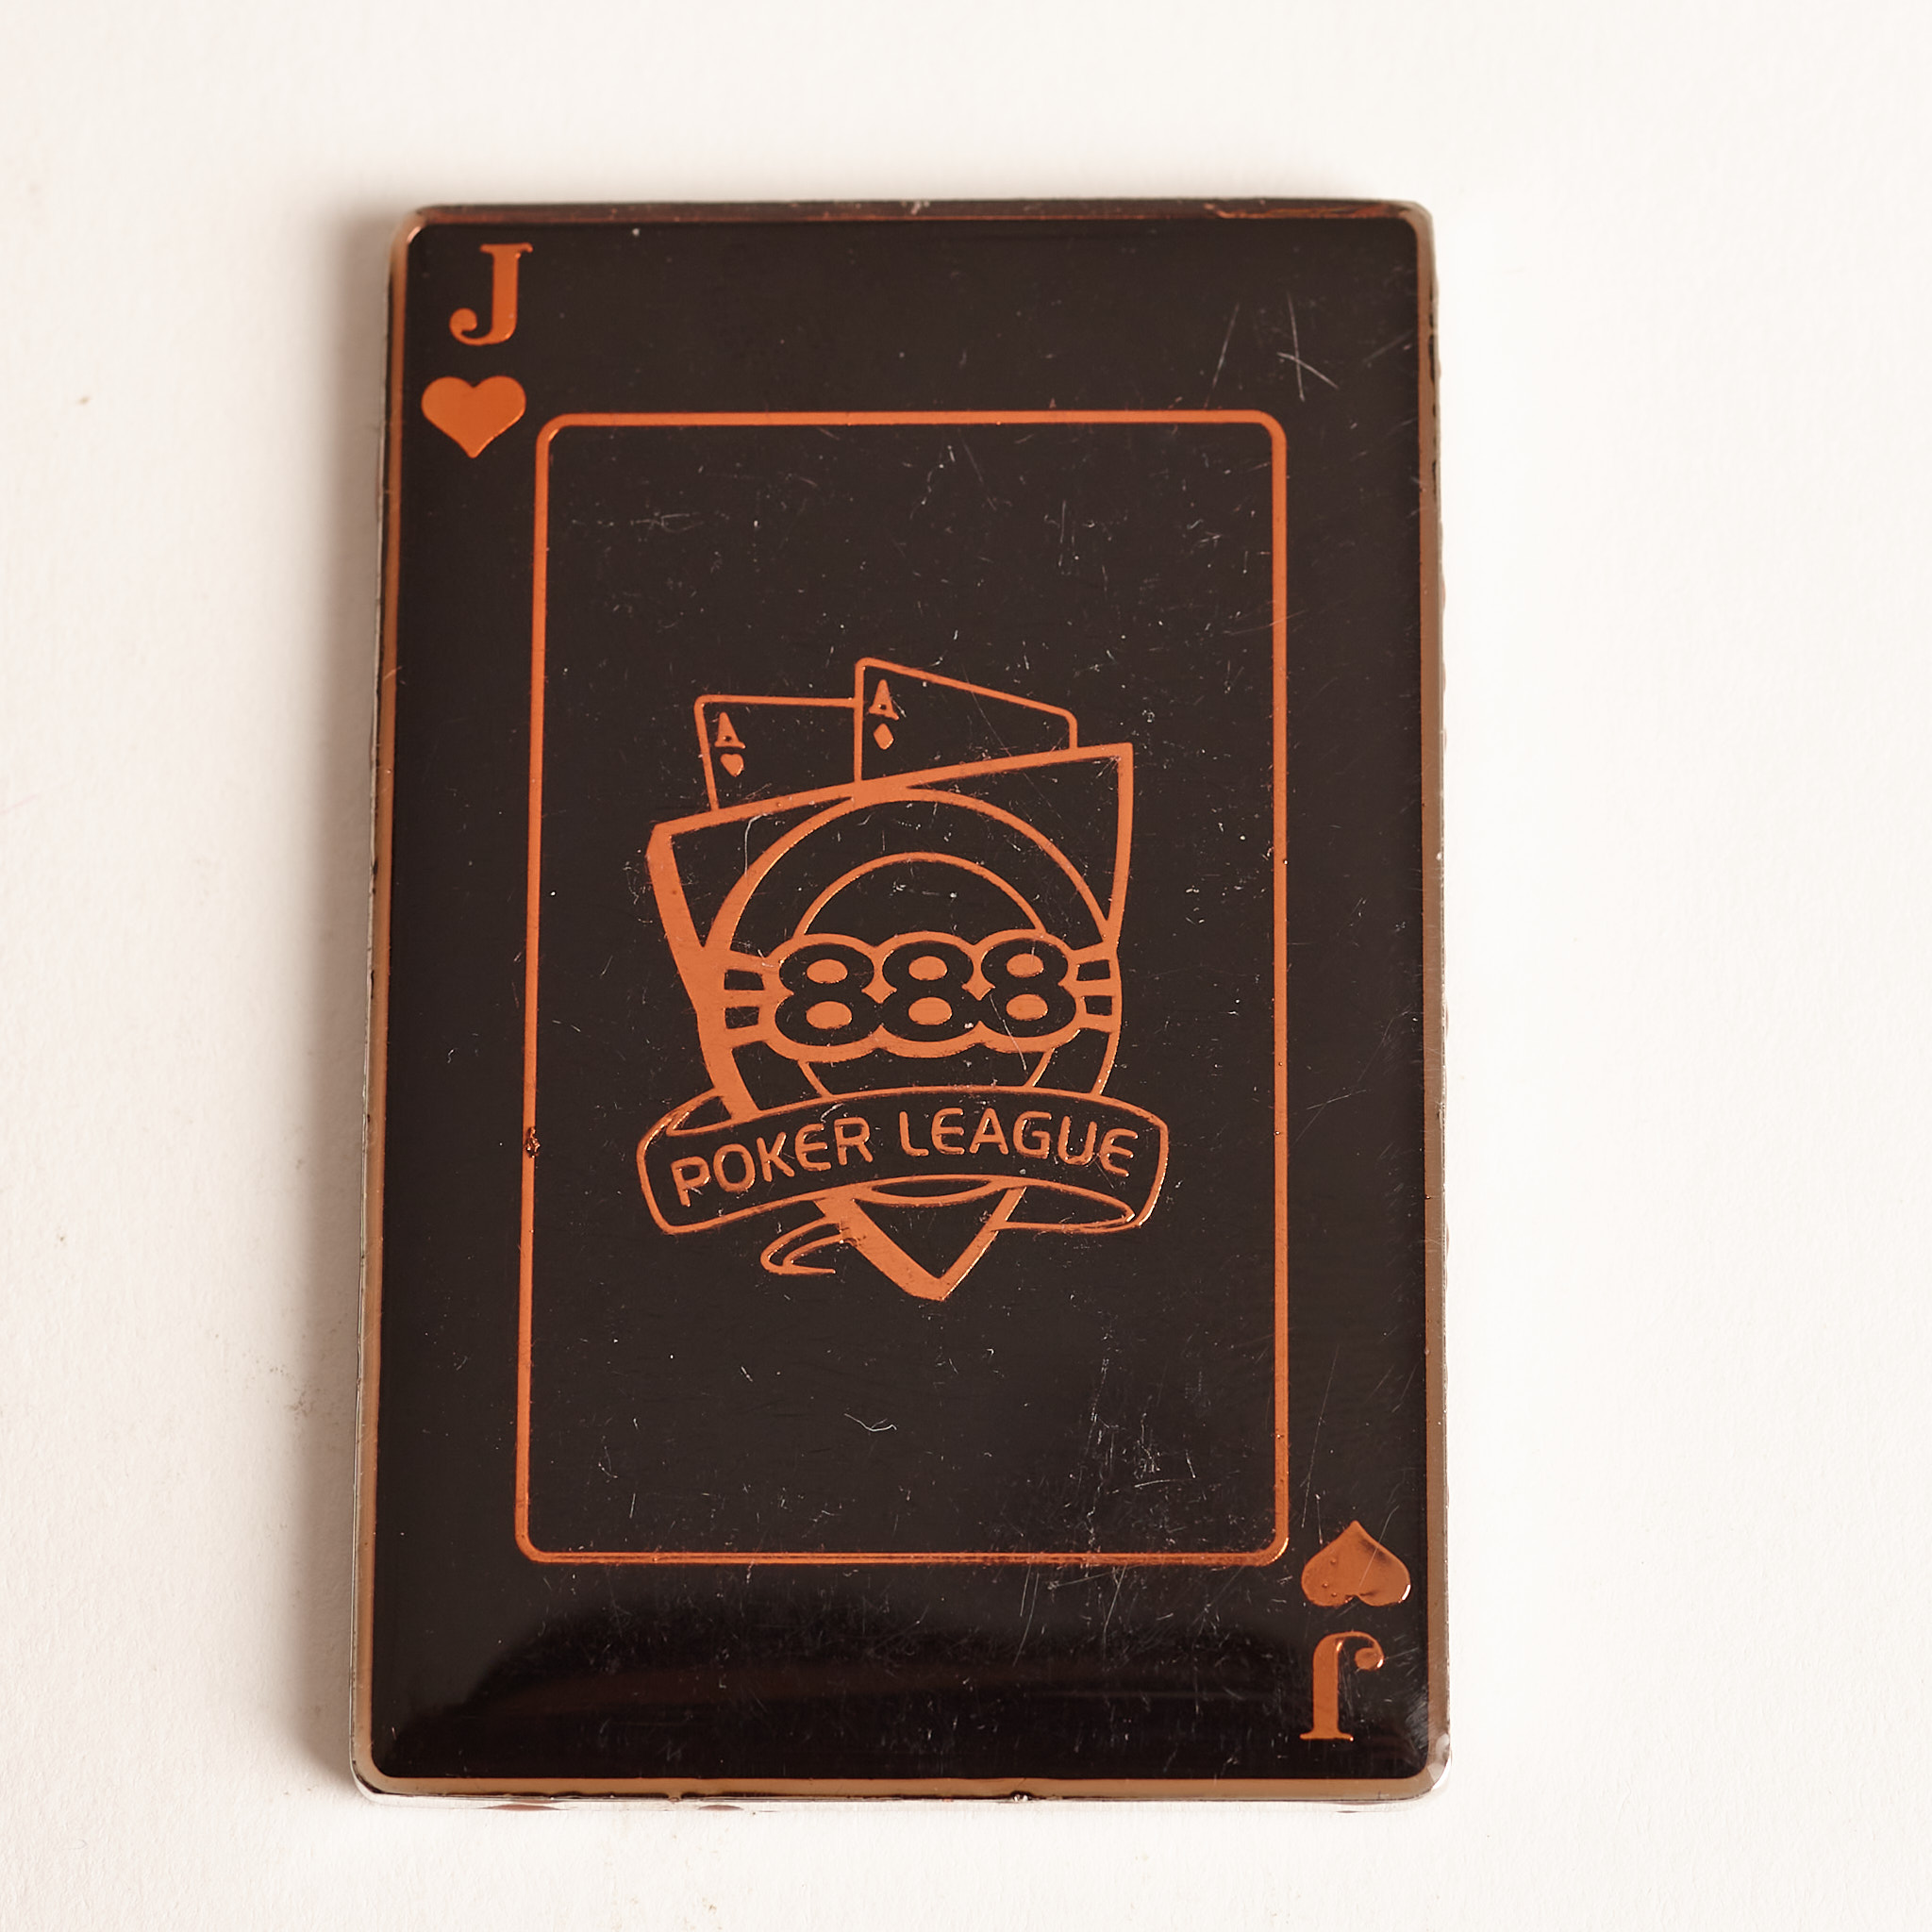 888 POKER LEAGUE, JACK HEARTS, TOURNAMENT WINNER, ROYAL FLUSH SERIES, Poker Card Guard